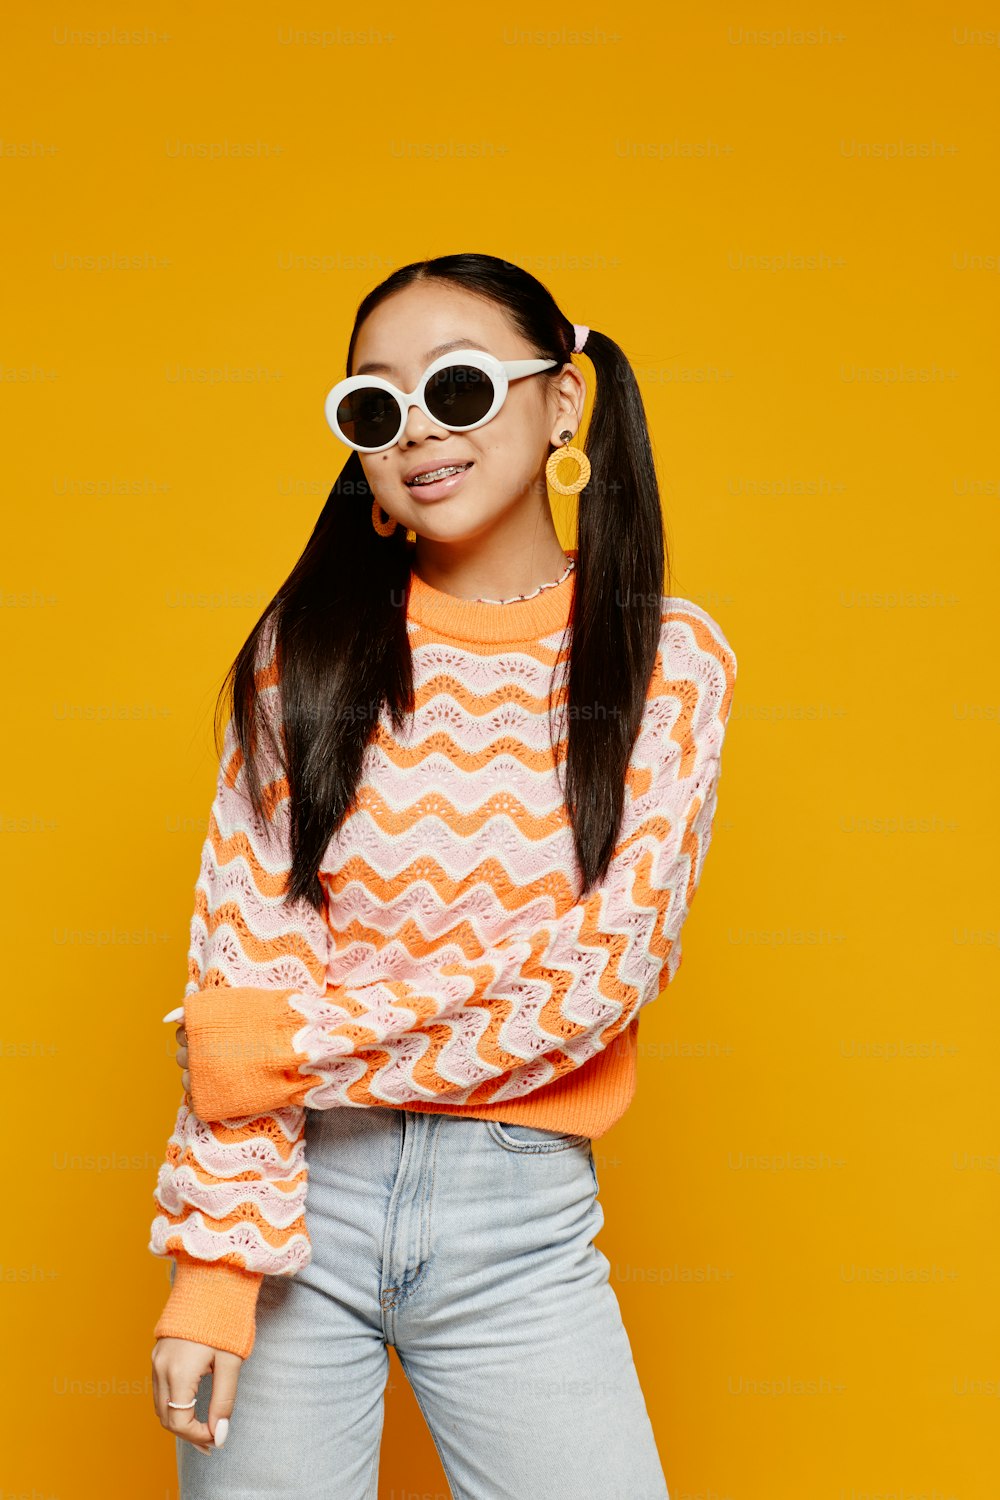 Retrato vertical da menina asiática adolescente que usa óculos de sol brancos sobre o fundo amarelo vibrante